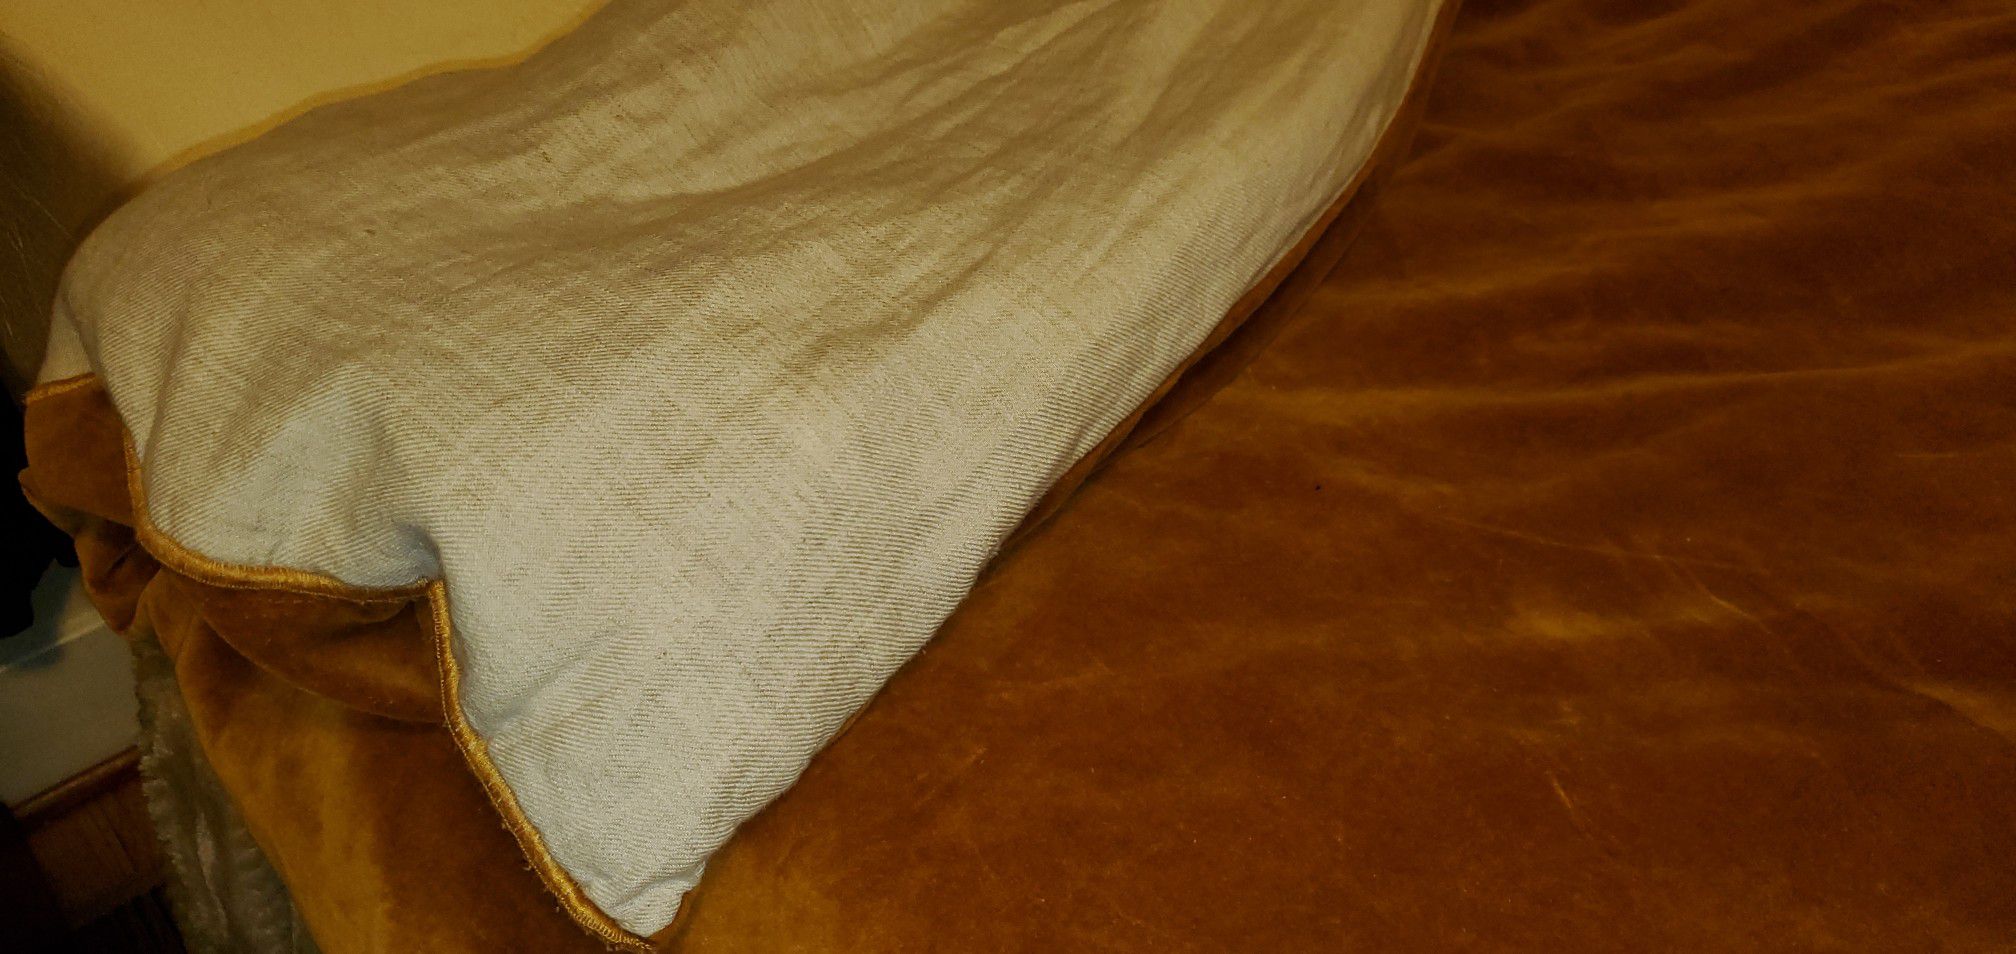 Twin size comforter & duvet